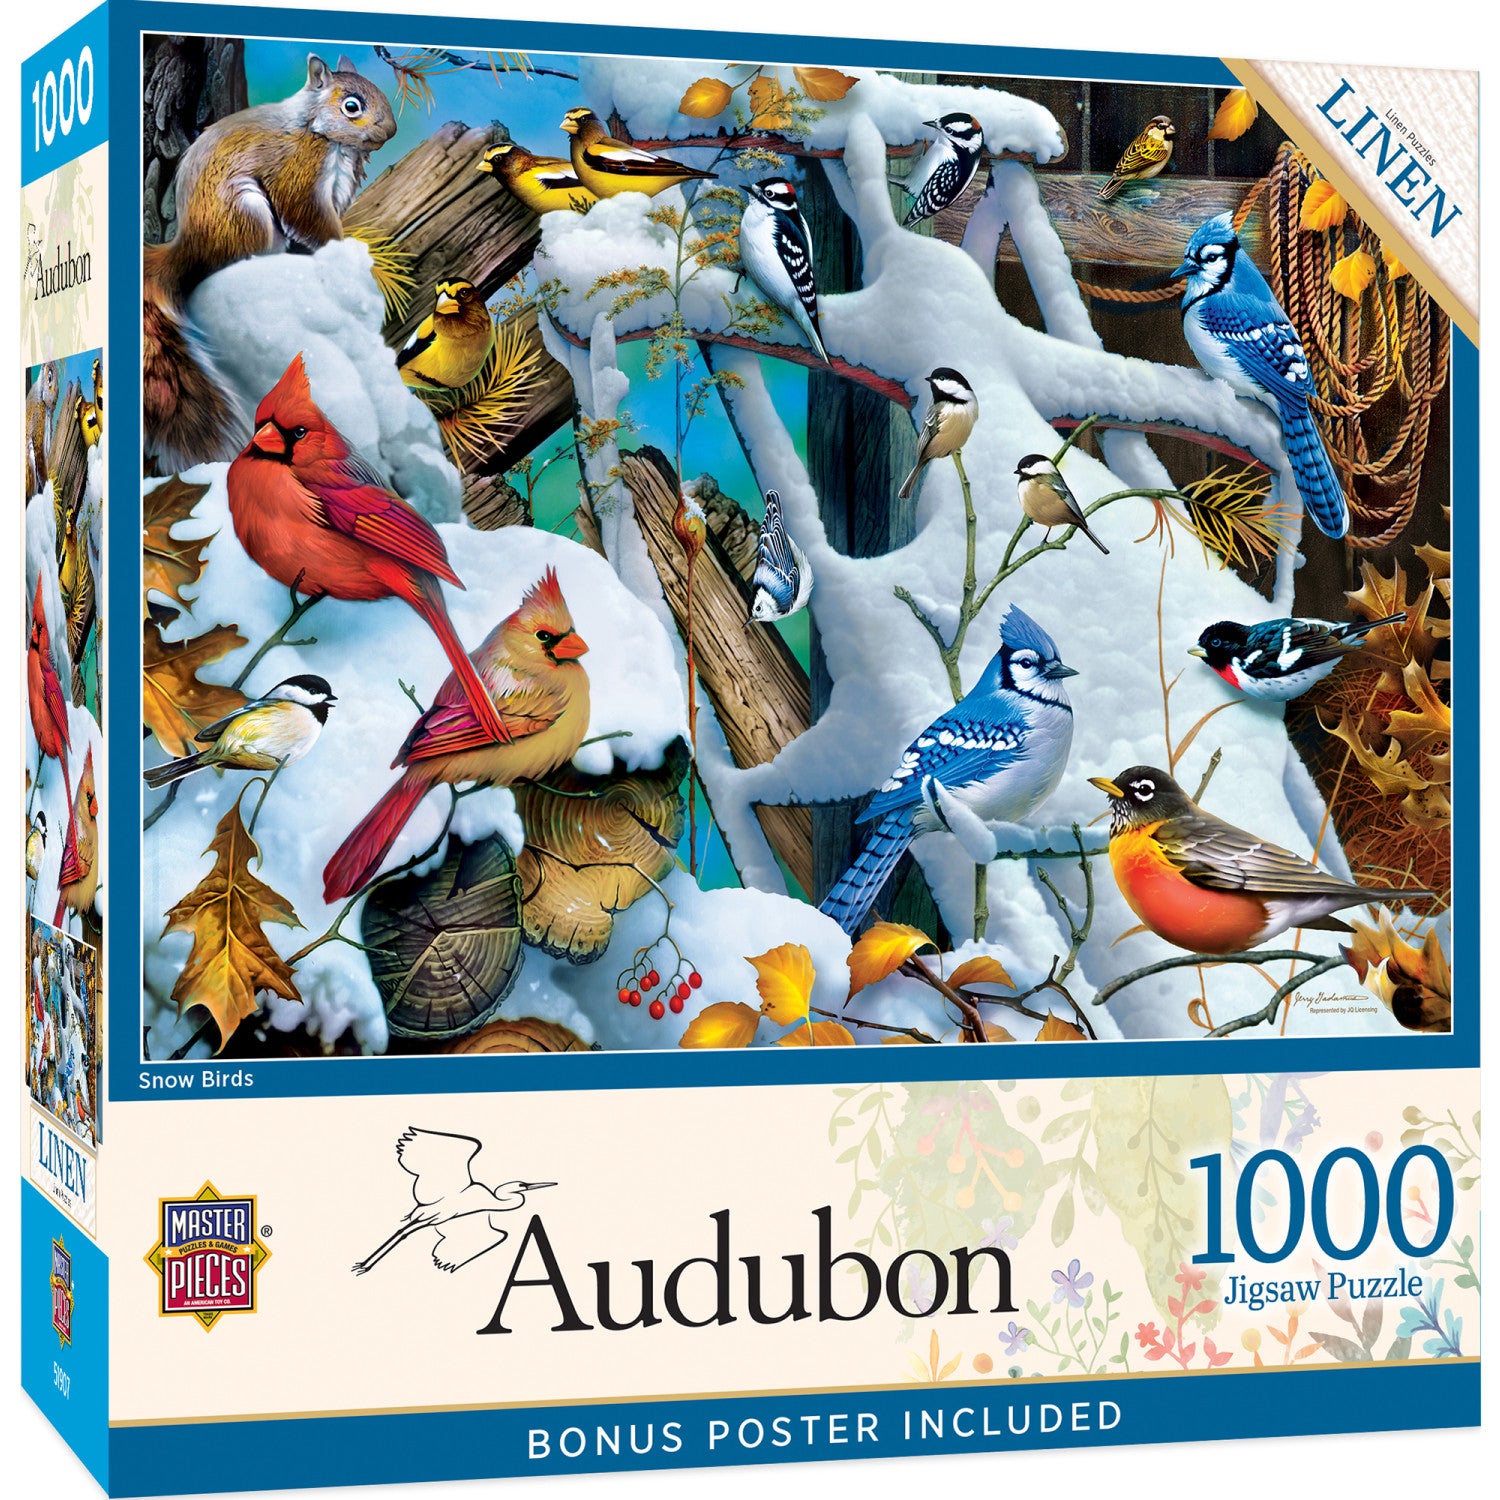 Audubon - Snow Birds 1000 Piece Jigsaw Puzzle